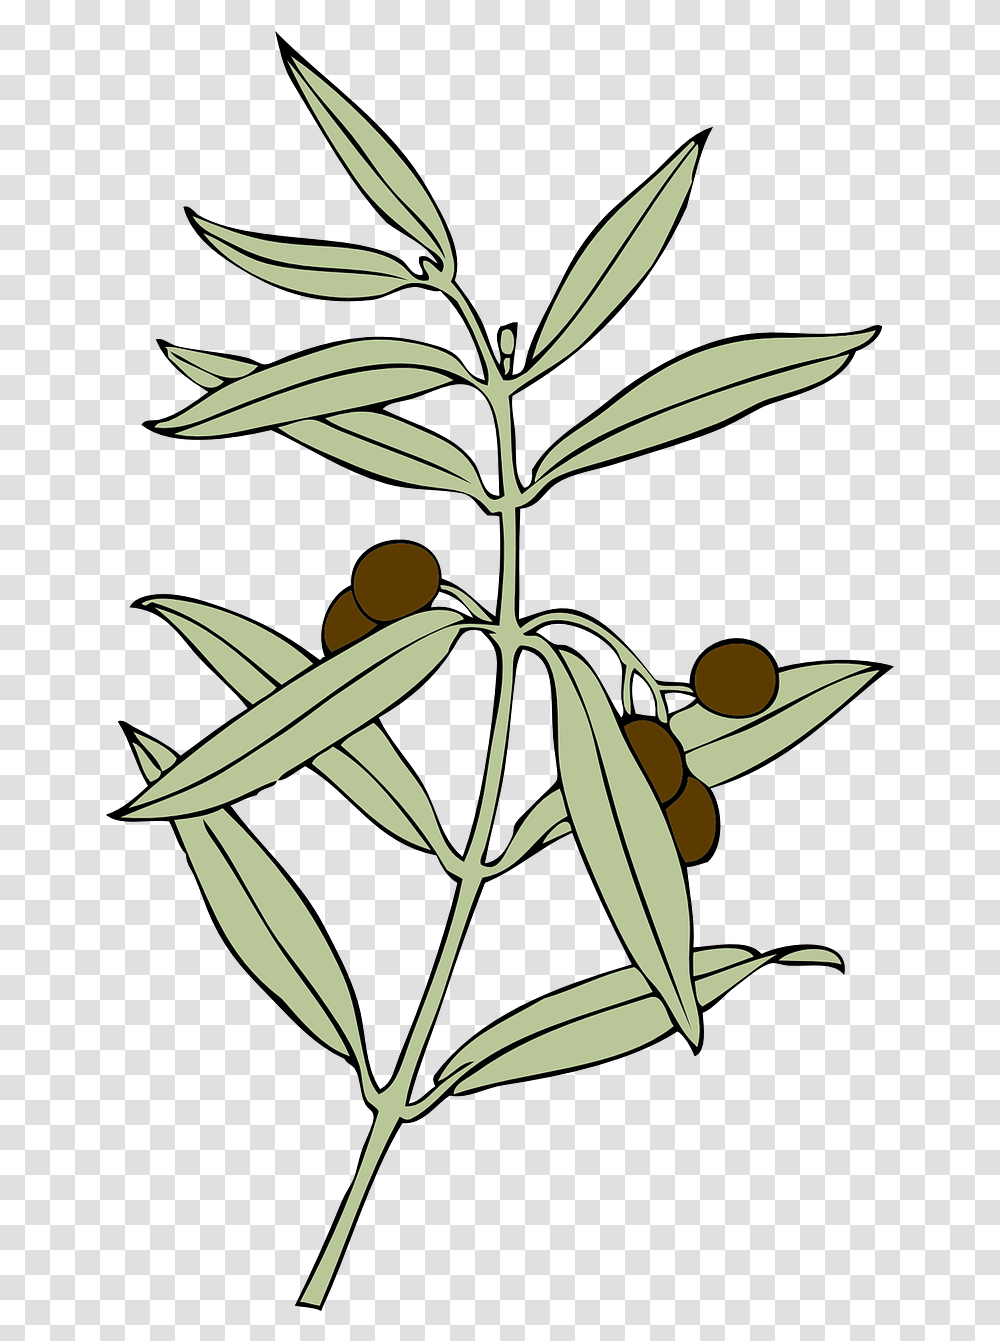 Olive Branch Olives Symbol Free Vector Graphic On Pixabay Olive Branch Peace Offering, Plant, Leaf, Acanthaceae, Flower Transparent Png